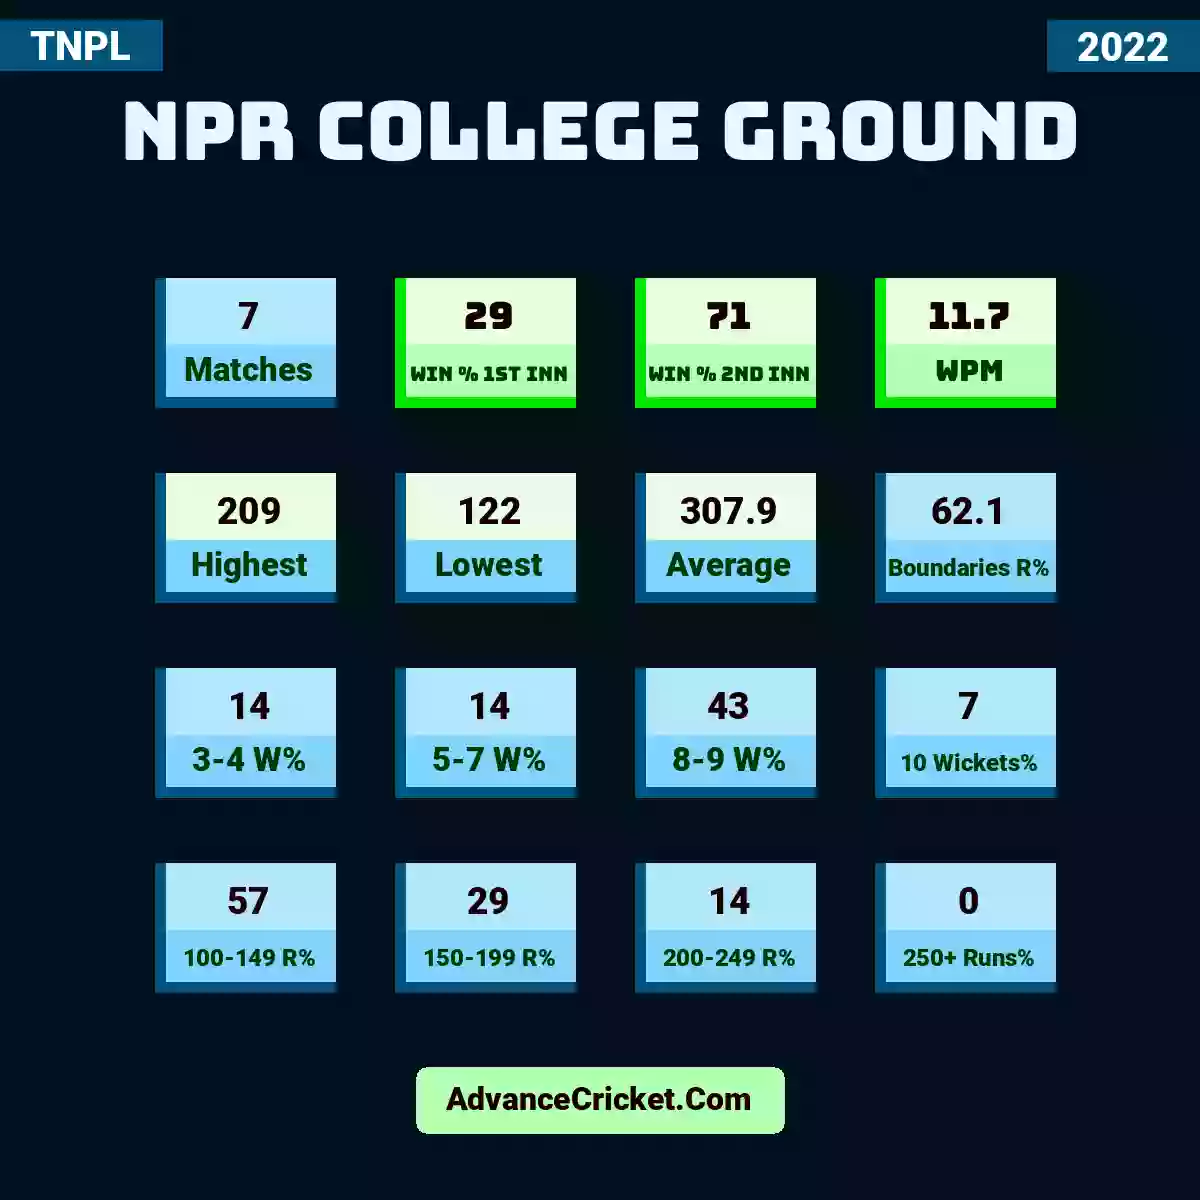 Image showing NPR College Ground with Matches: 7, Win % 1st Inn: 29, Win % 2nd Inn: 71, WPM: 11.7, Highest: 209, Lowest: 122, Average: 307.9, Boundaries R%: 62.1, 3-4 W%: 14, 5-7 W%: 14, 8-9 W%: 43, 10 Wickets%: 7, 100-149 R%: 57, 150-199 R%: 29, 200-249 R%: 14, 250+ Runs%: 0.